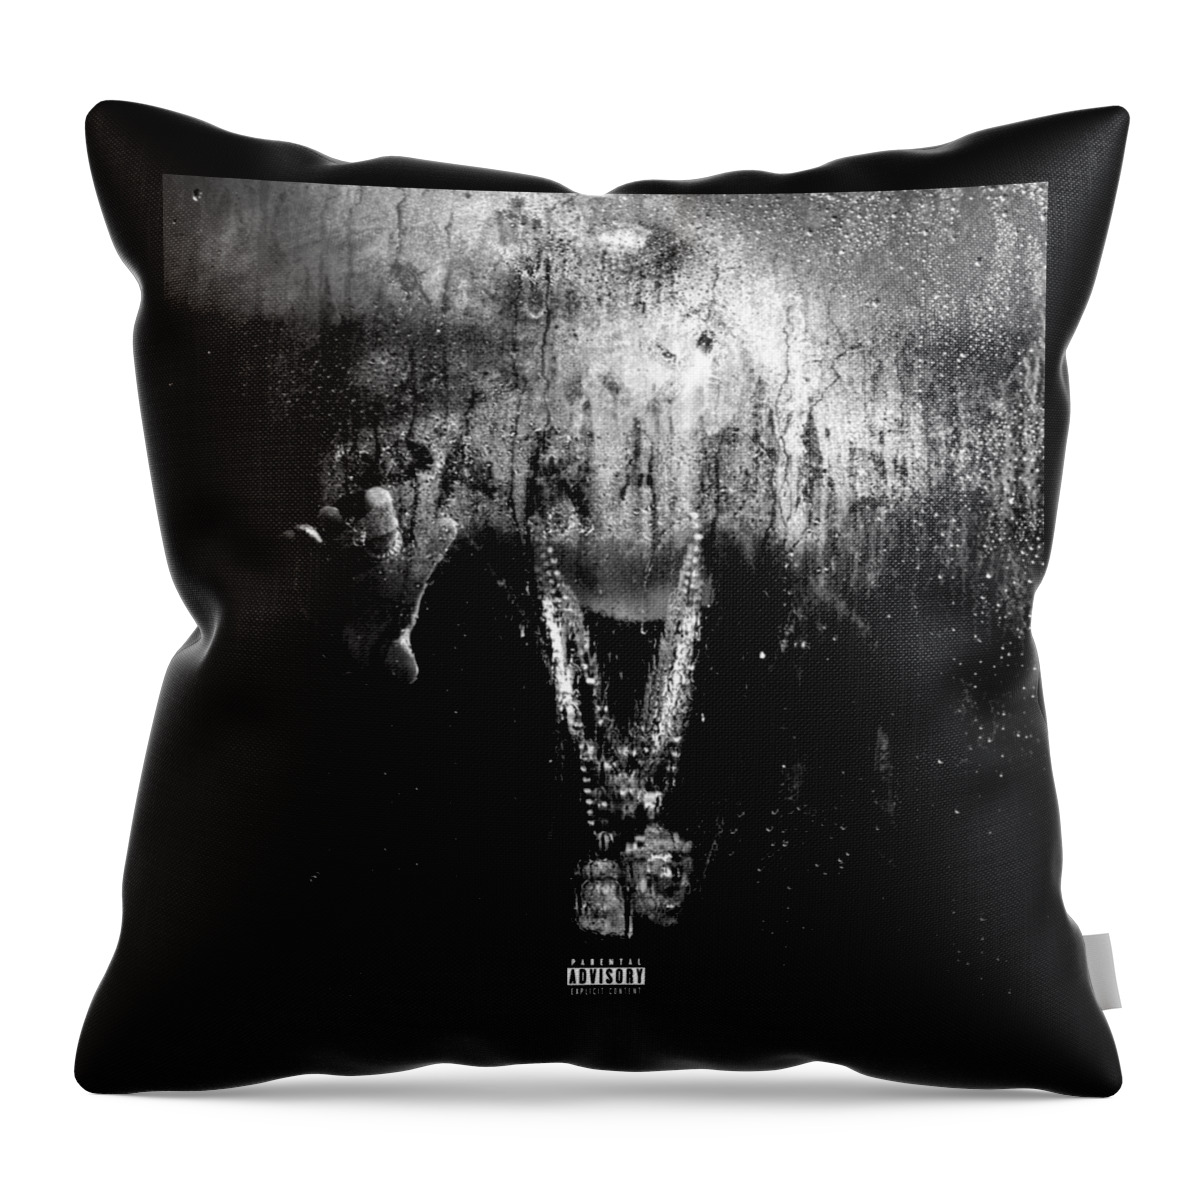 Big Throw Pillow featuring the digital art Big Sean And Tyga by Vuad Gera